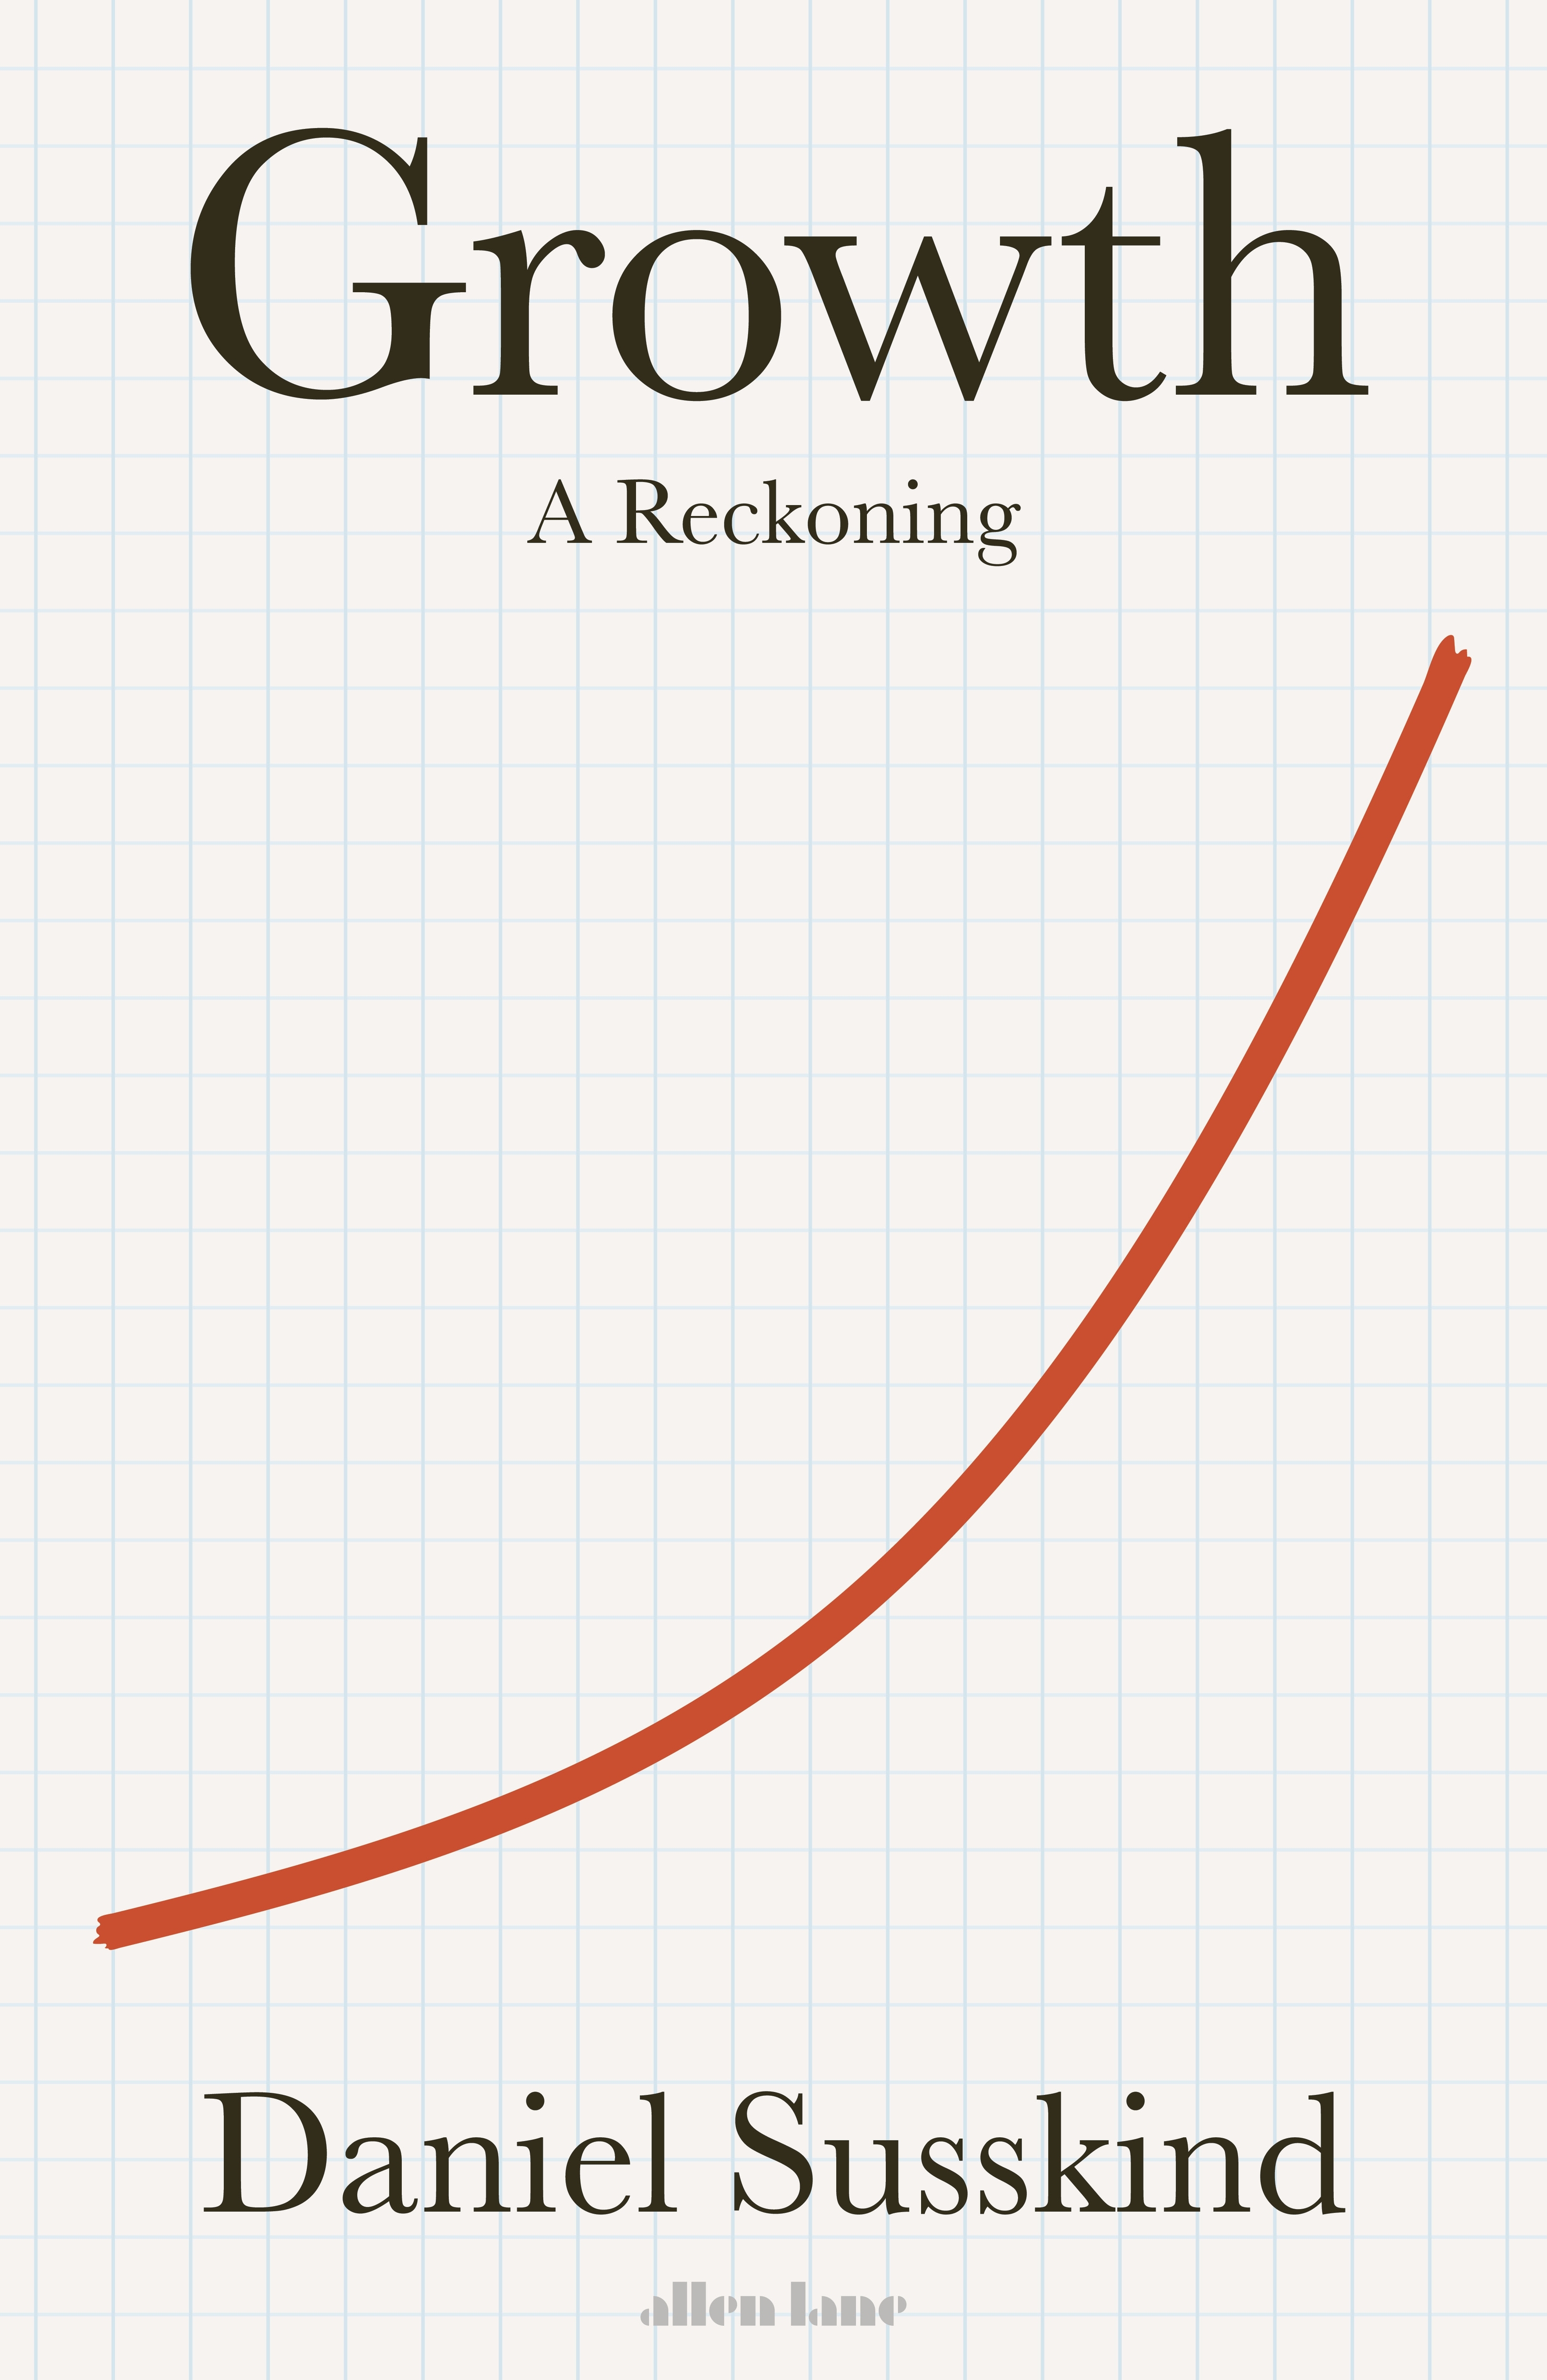 Growth by Daniel Susskind - Penguin Books Australia